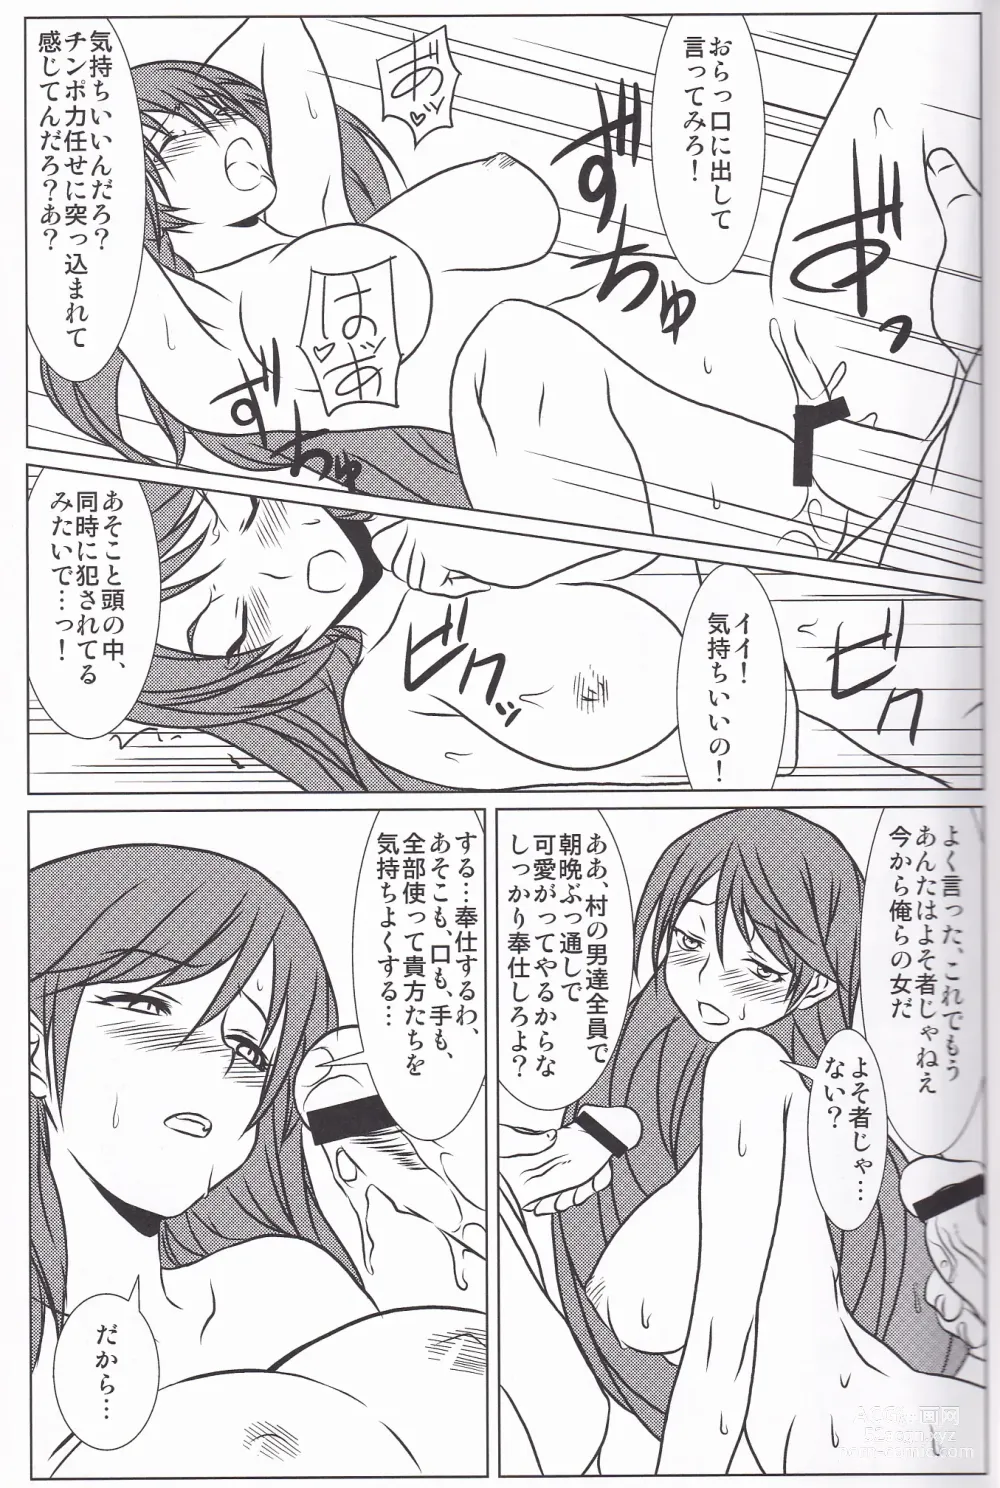 Page 22 of doujinshi Hibi no Uta